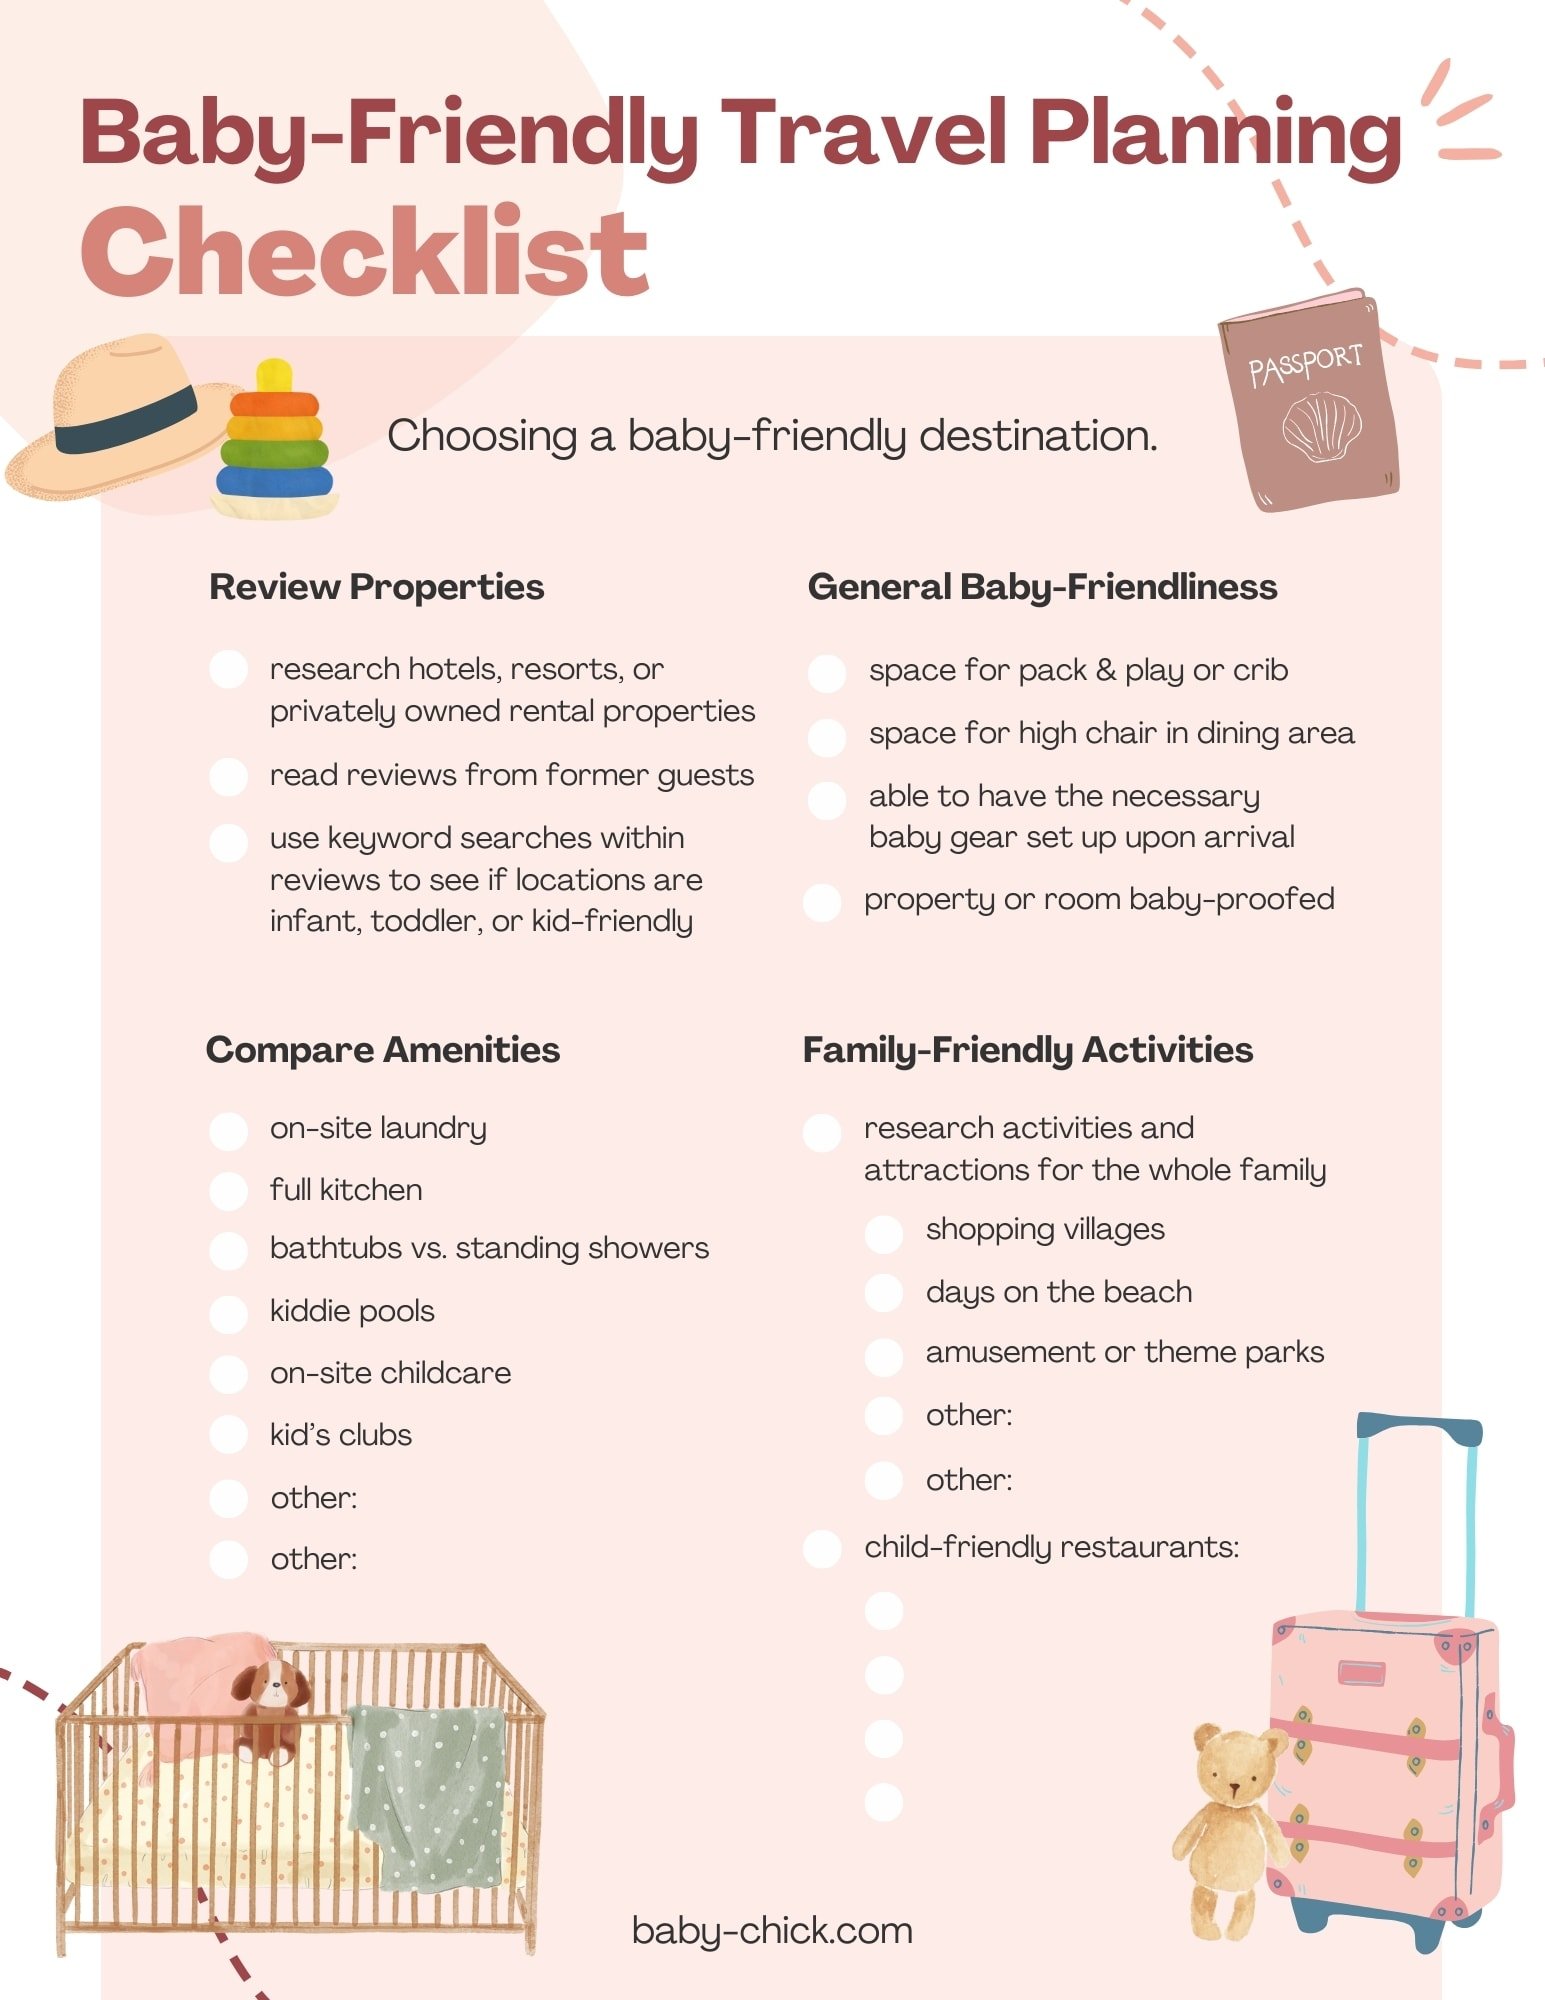 Baby-Friendly Travel Planning Checklist